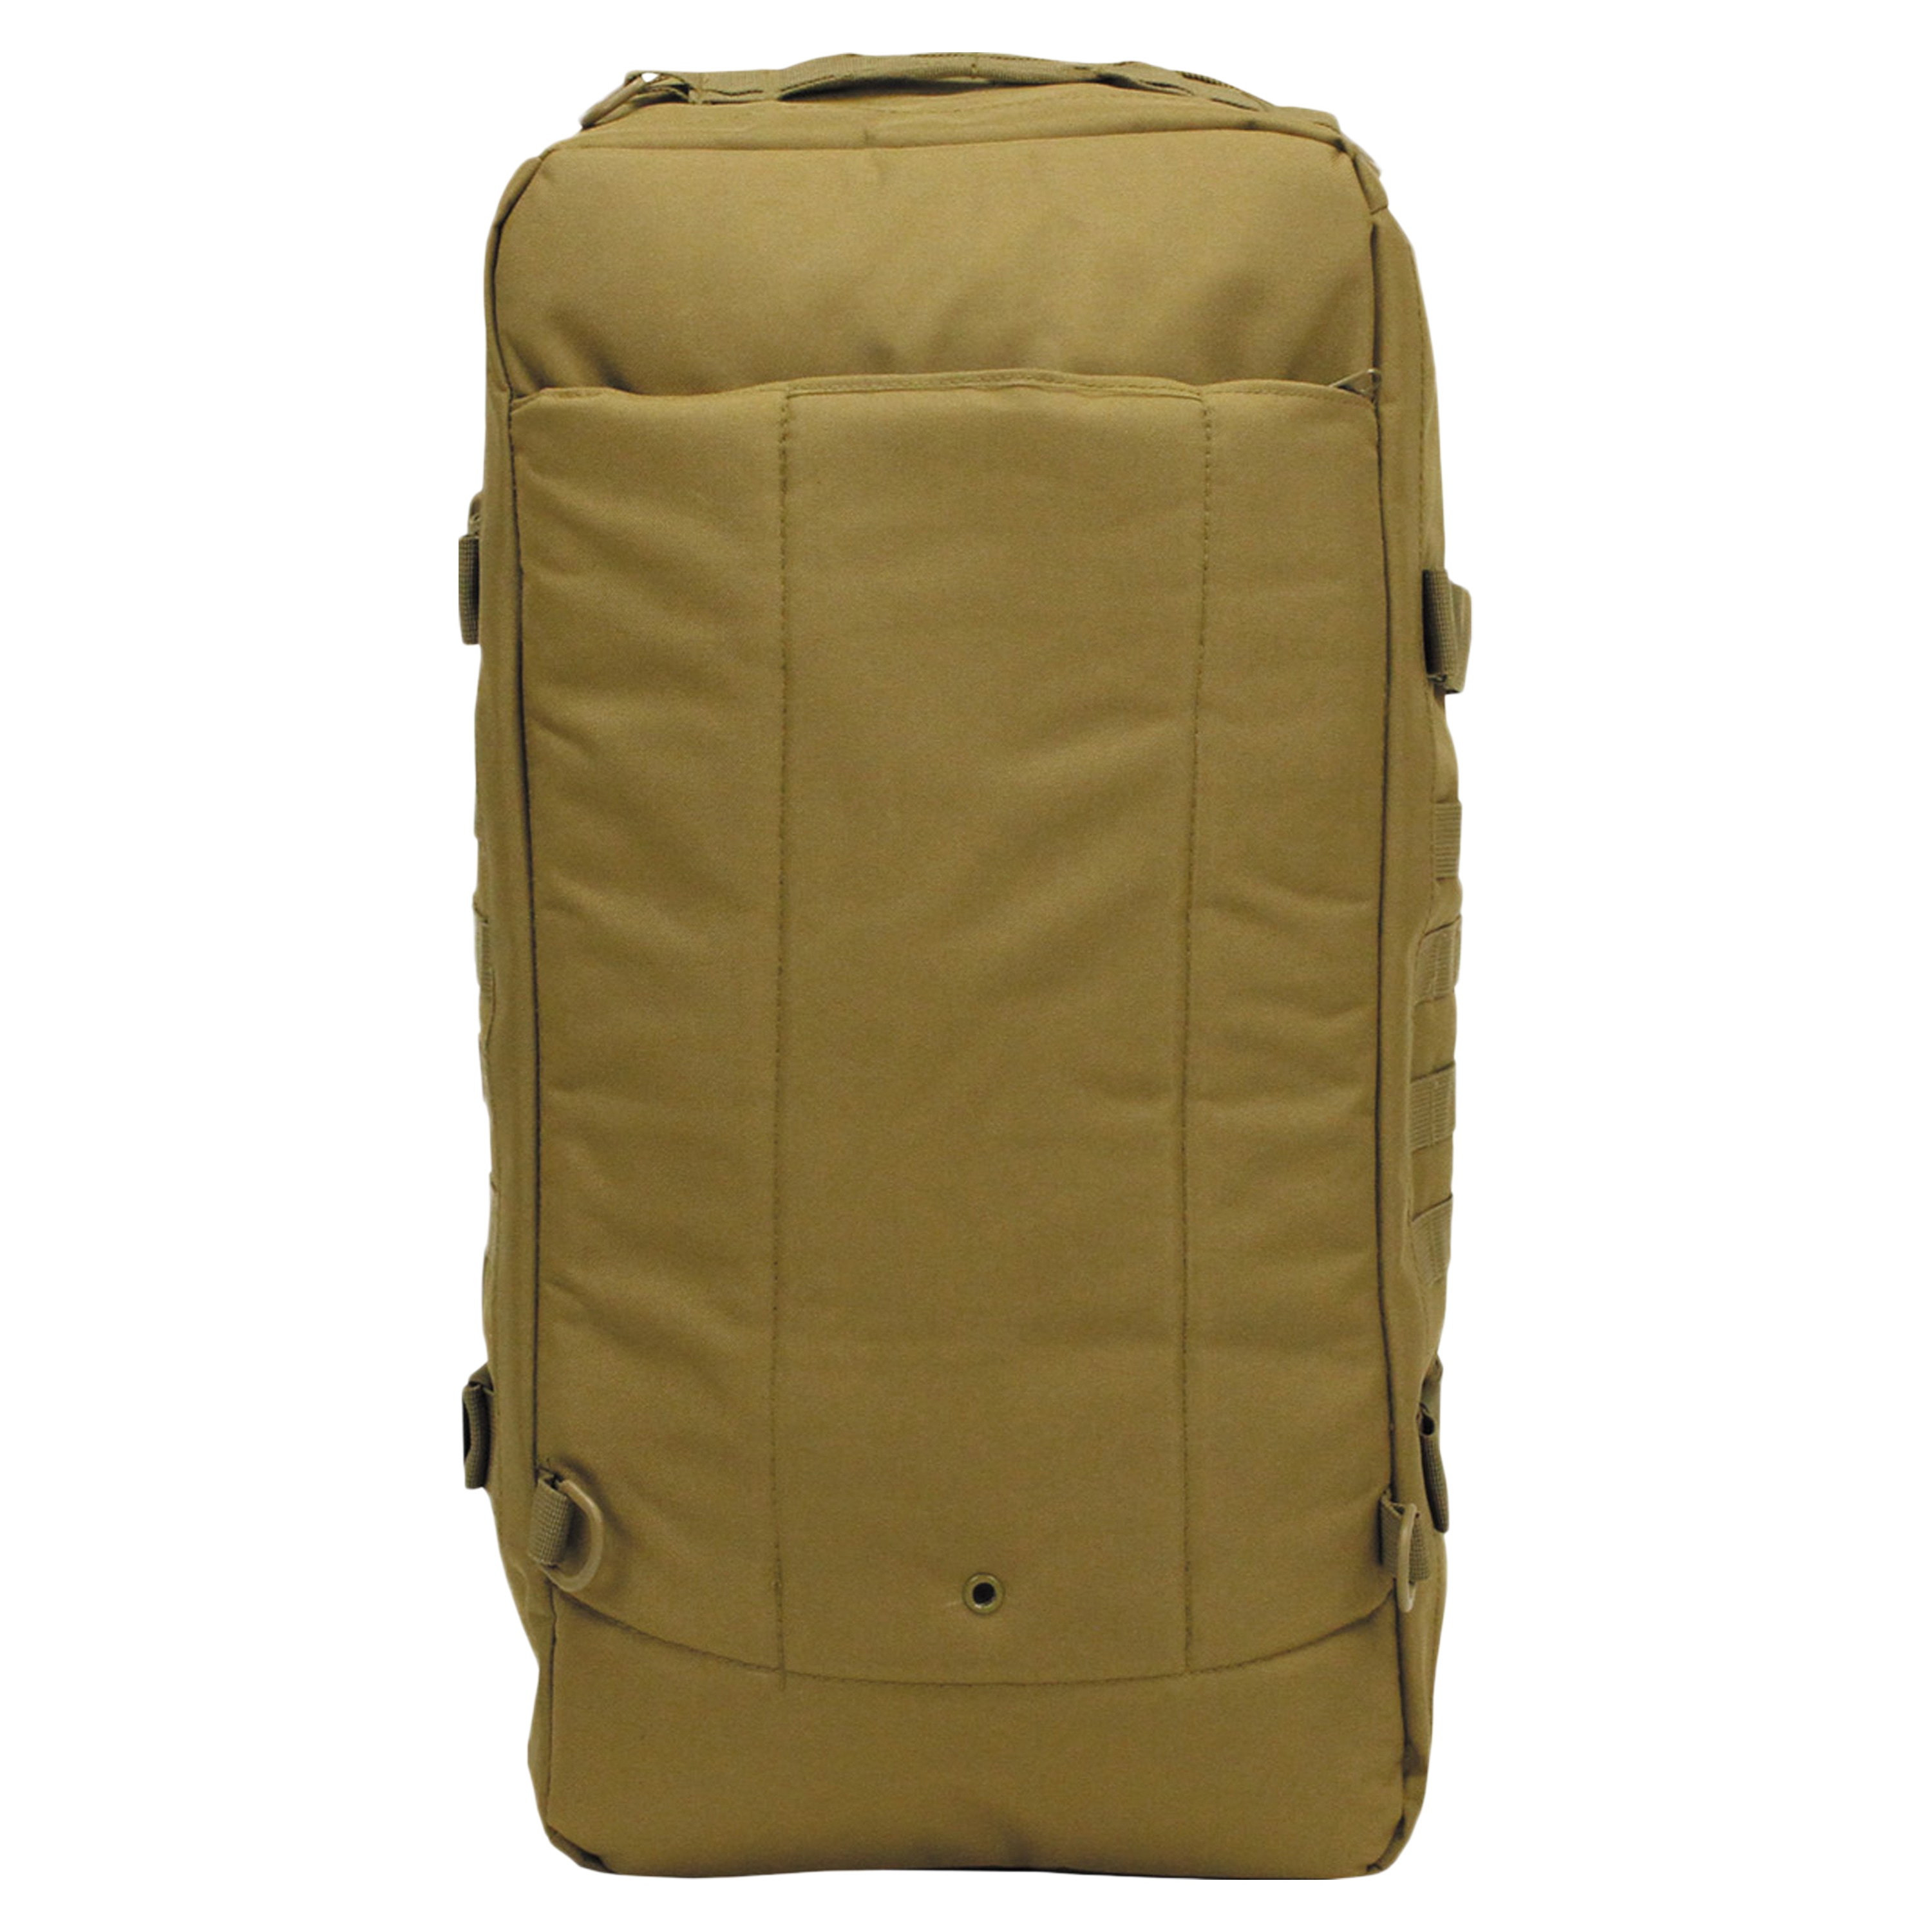 MFH Backpack Travel Bag coyote tan